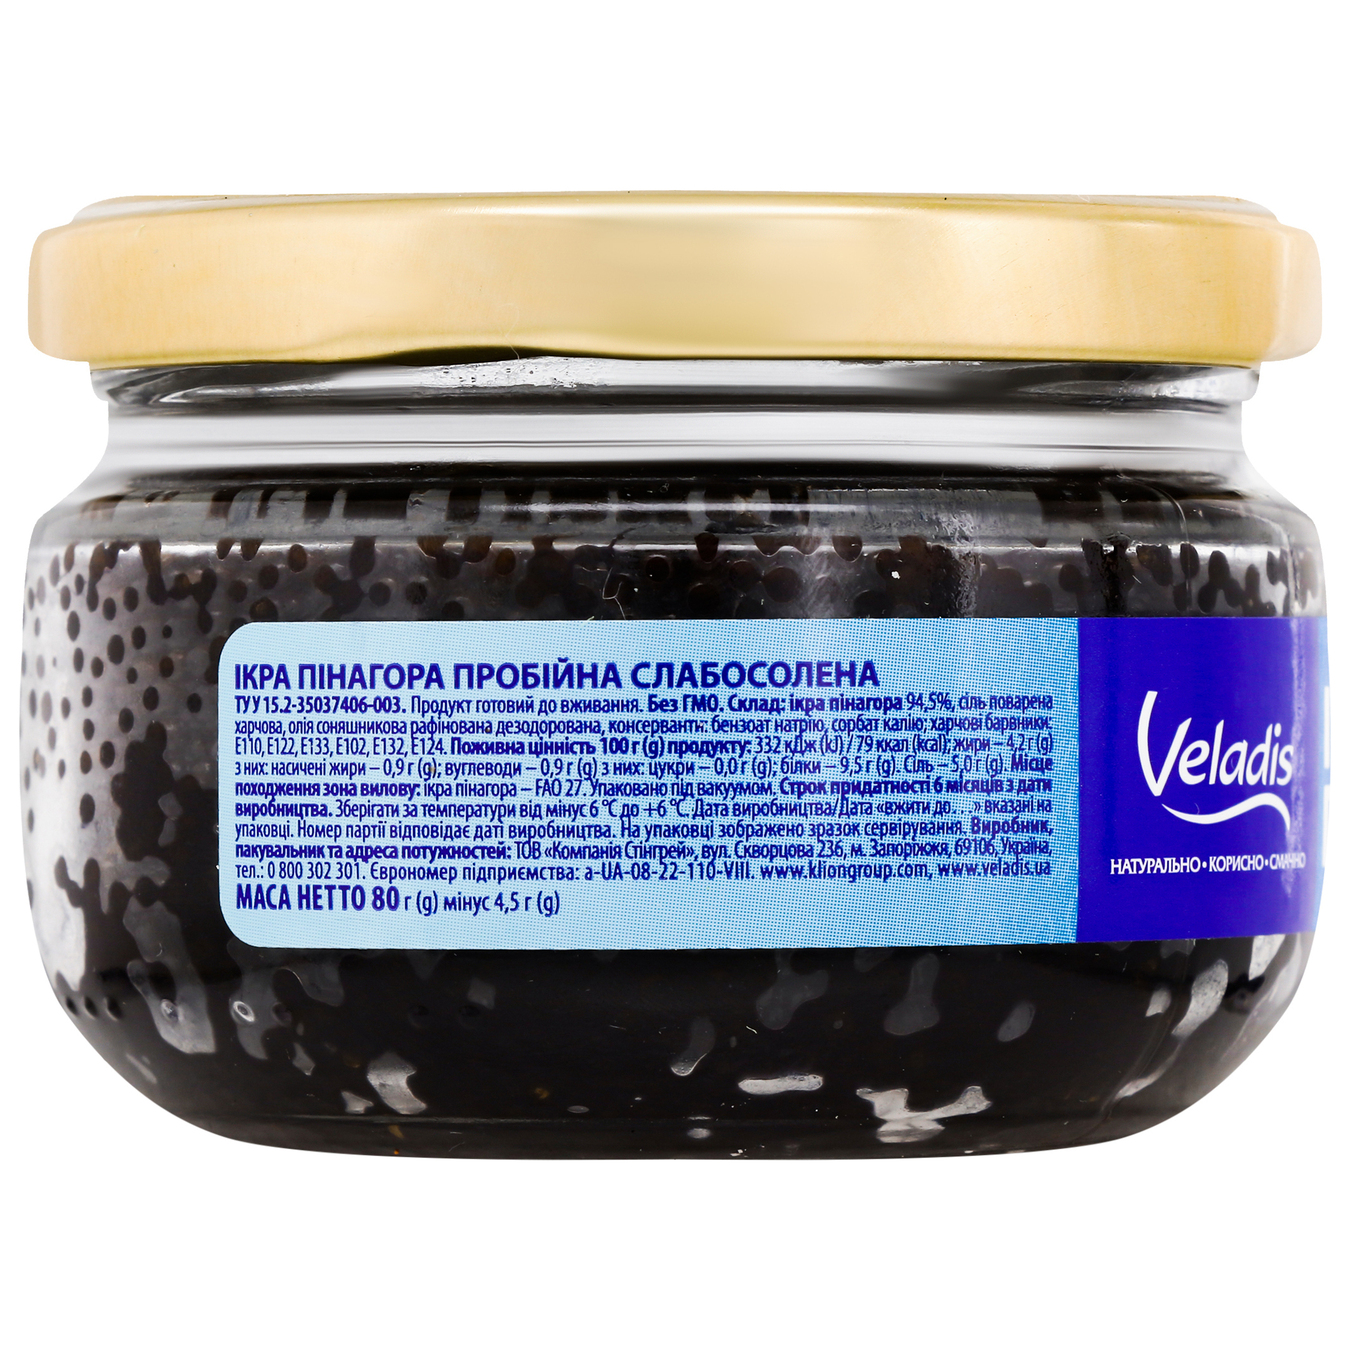 Veladis pinagora caviar 80g 2